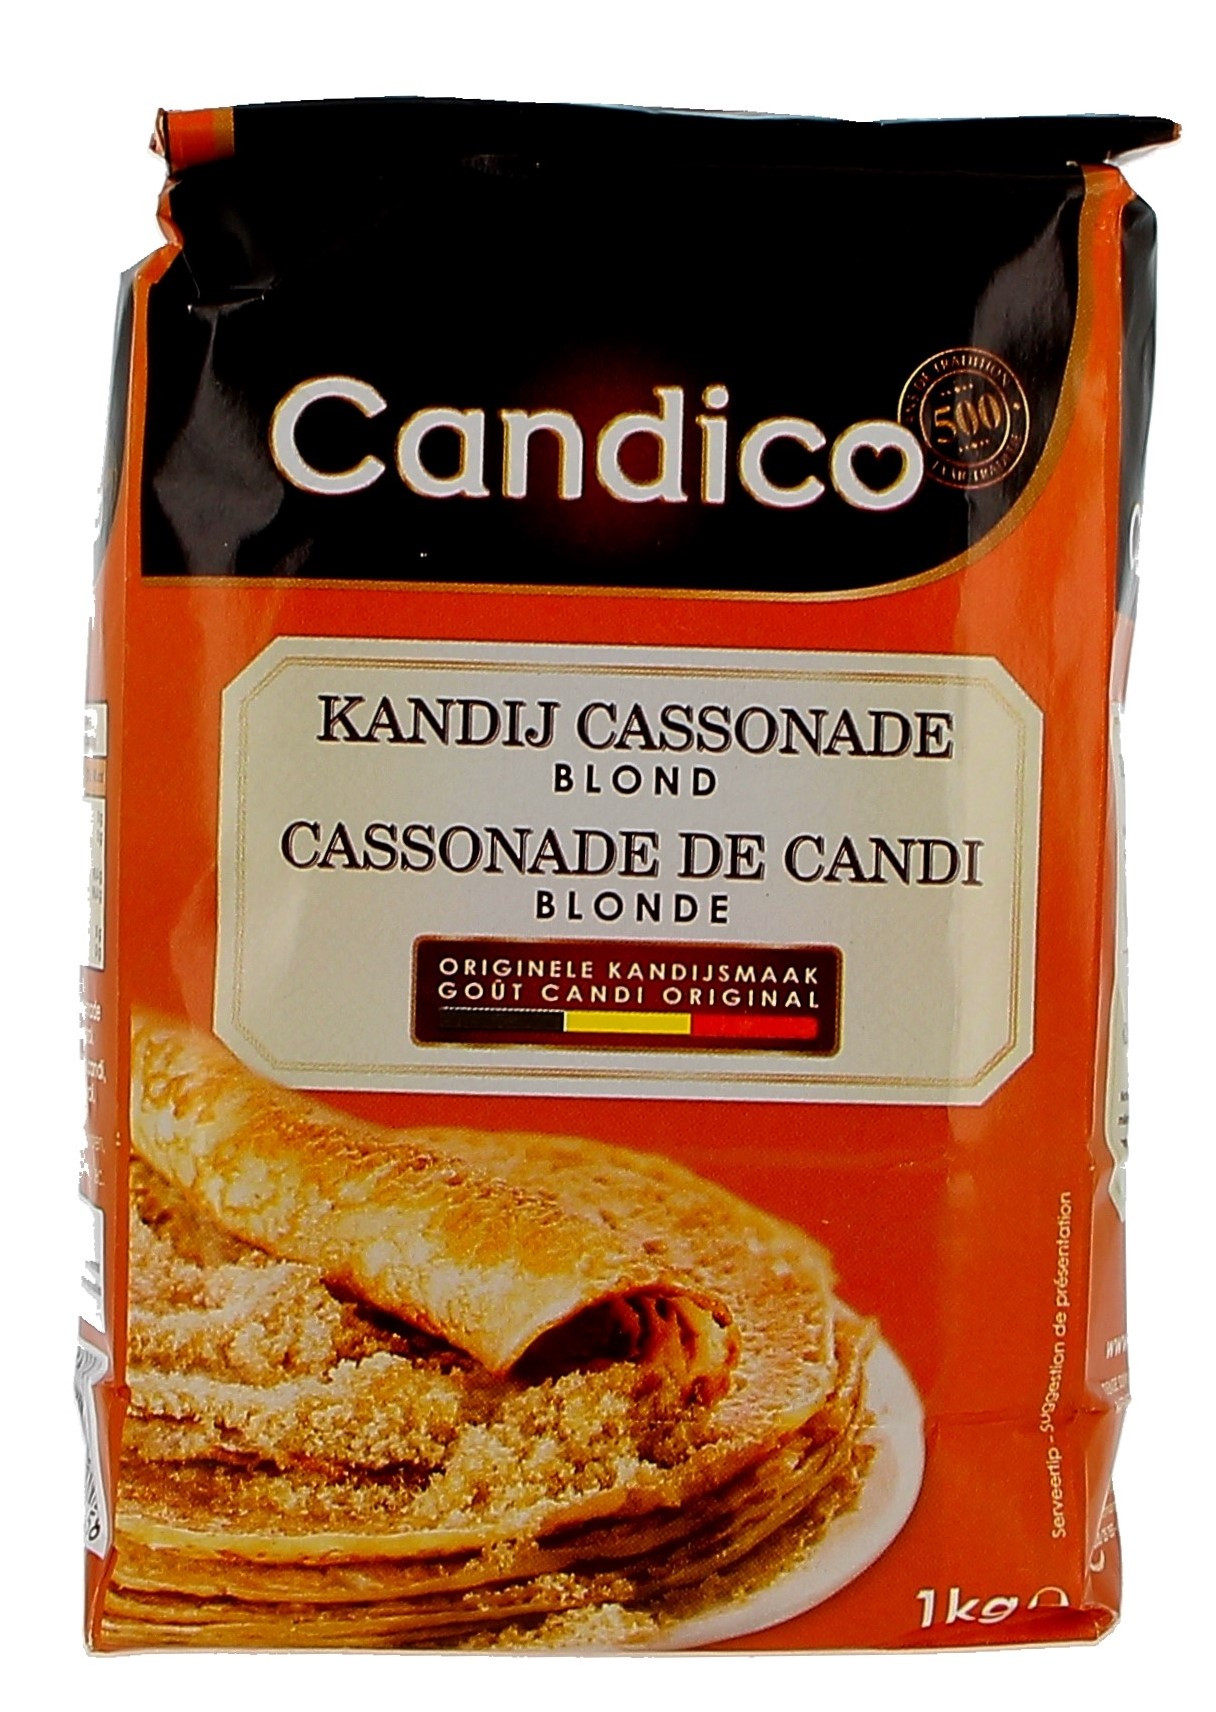 Cassonade de candi blonde 1kg Candico (Suiker)